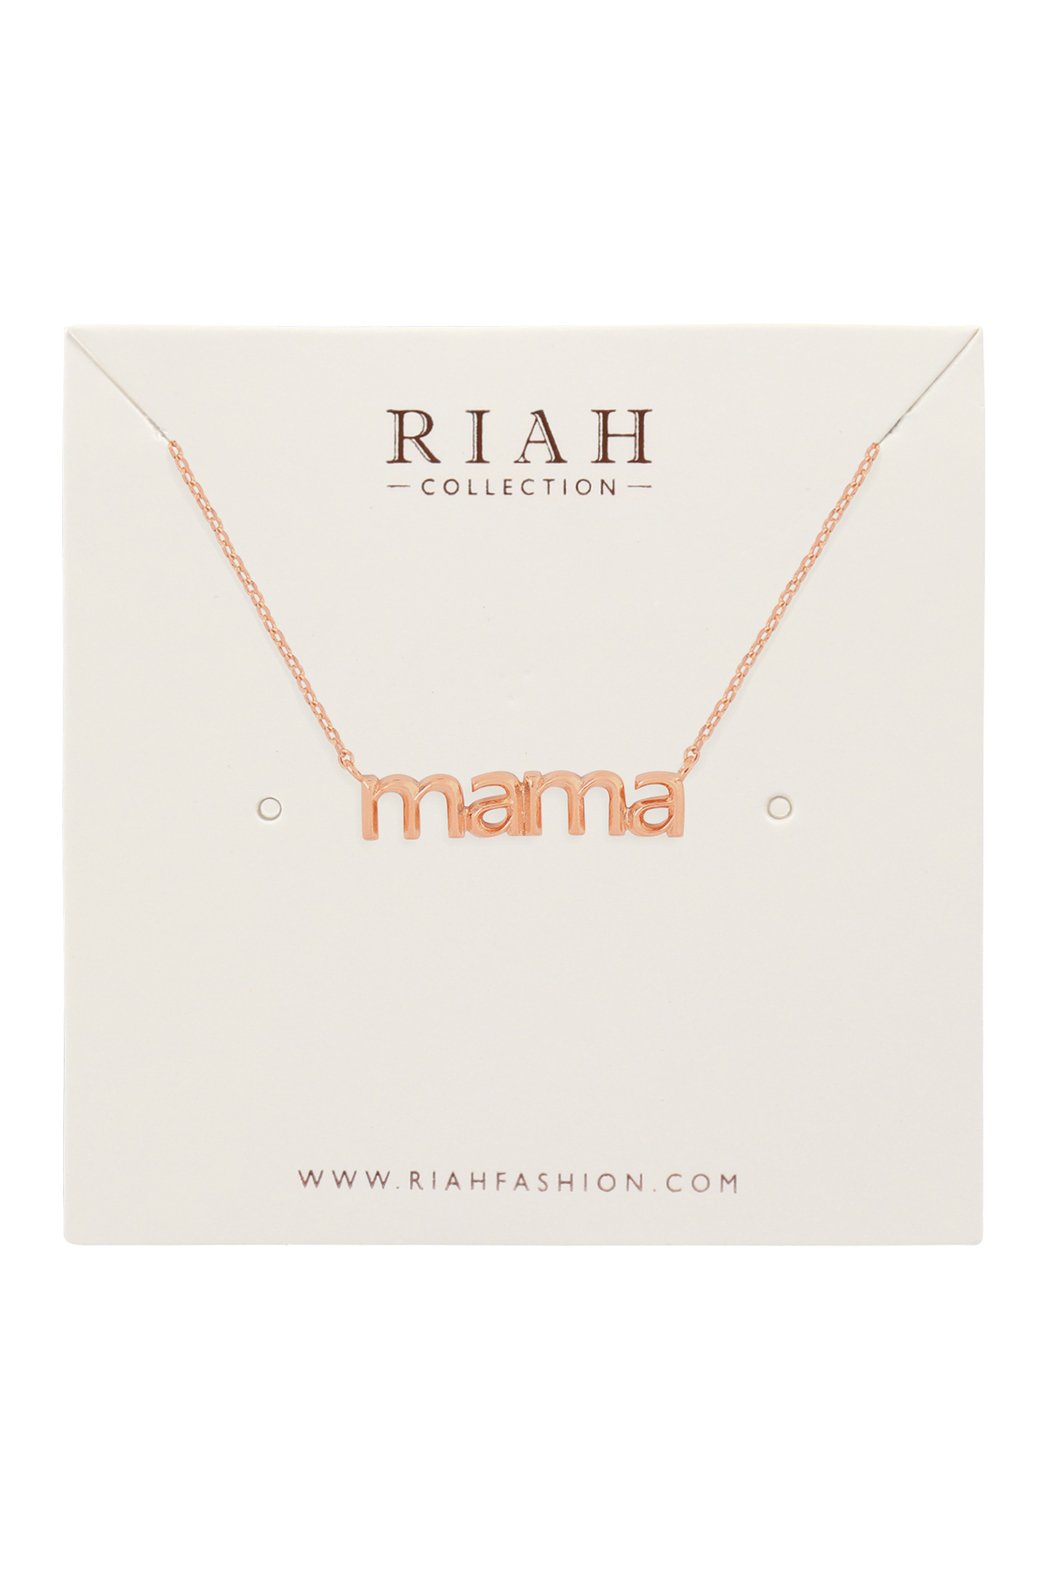 Hdnen512 - "Mama" Pendant Necklace